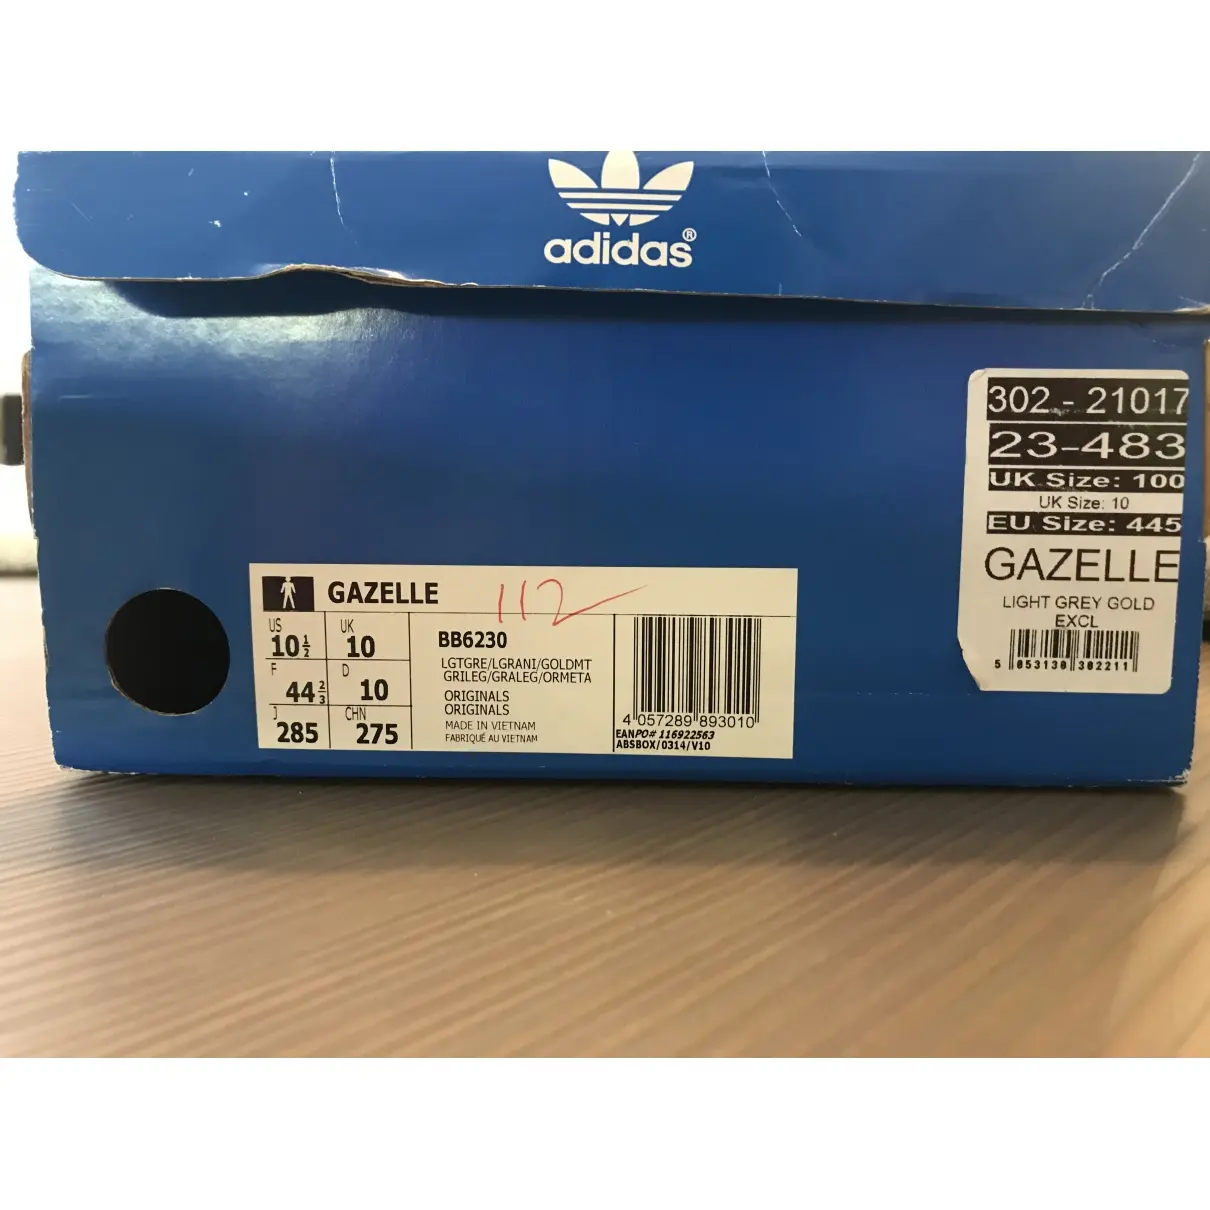 Gazelle low trainers Adidas